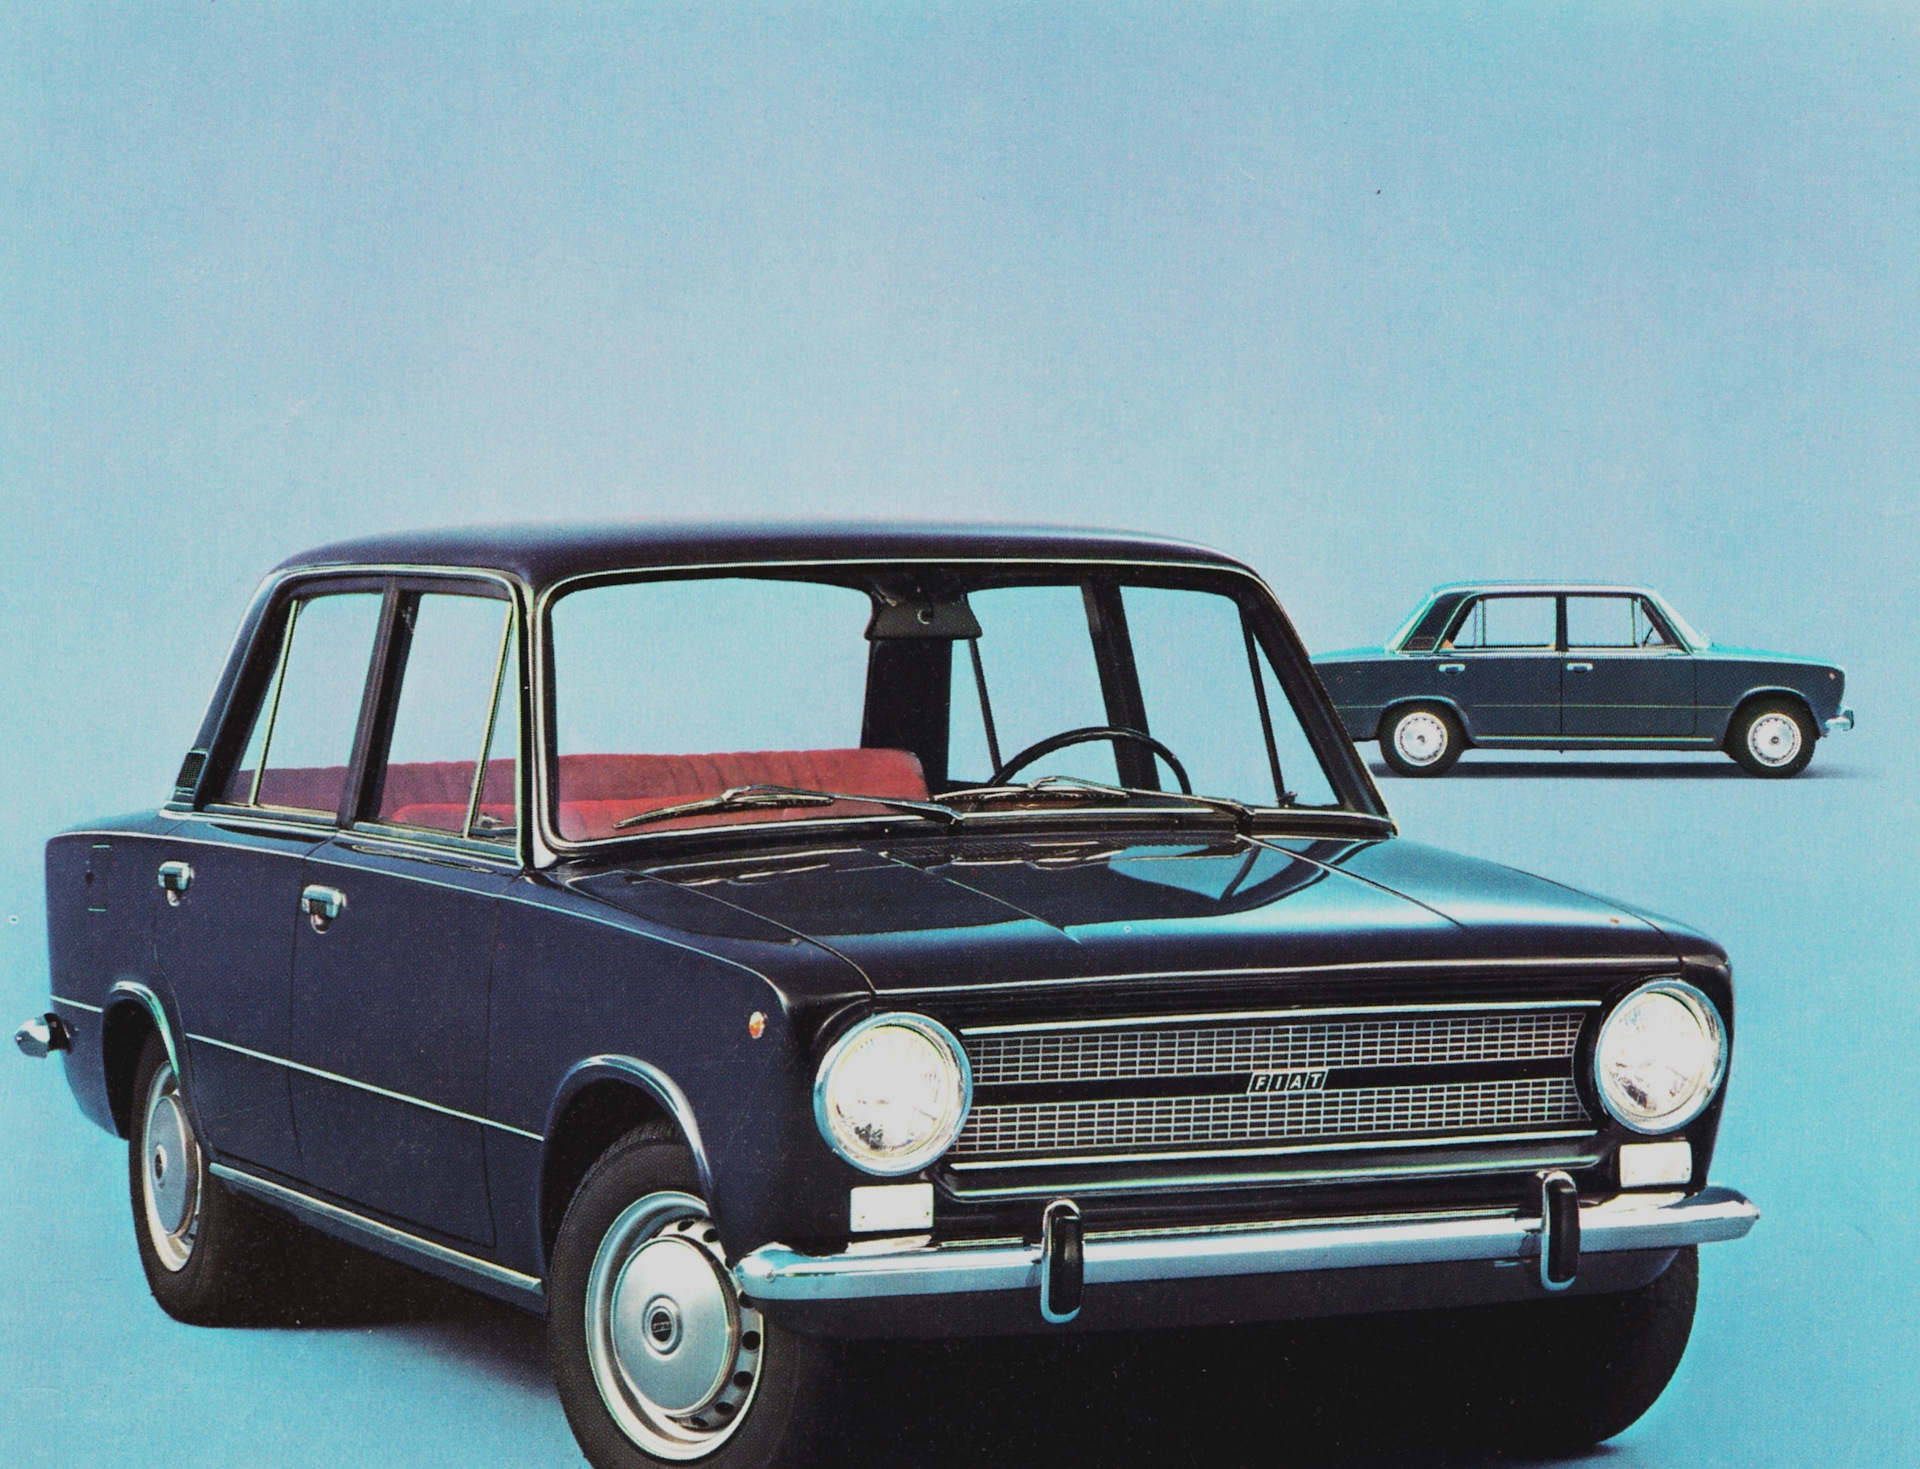 Год выпуска фиат. Fiat 124 и ВАЗ 2101. Фиат 124 1966. Жигули 2101 и Фиат 124. Жигули Фиат 124.